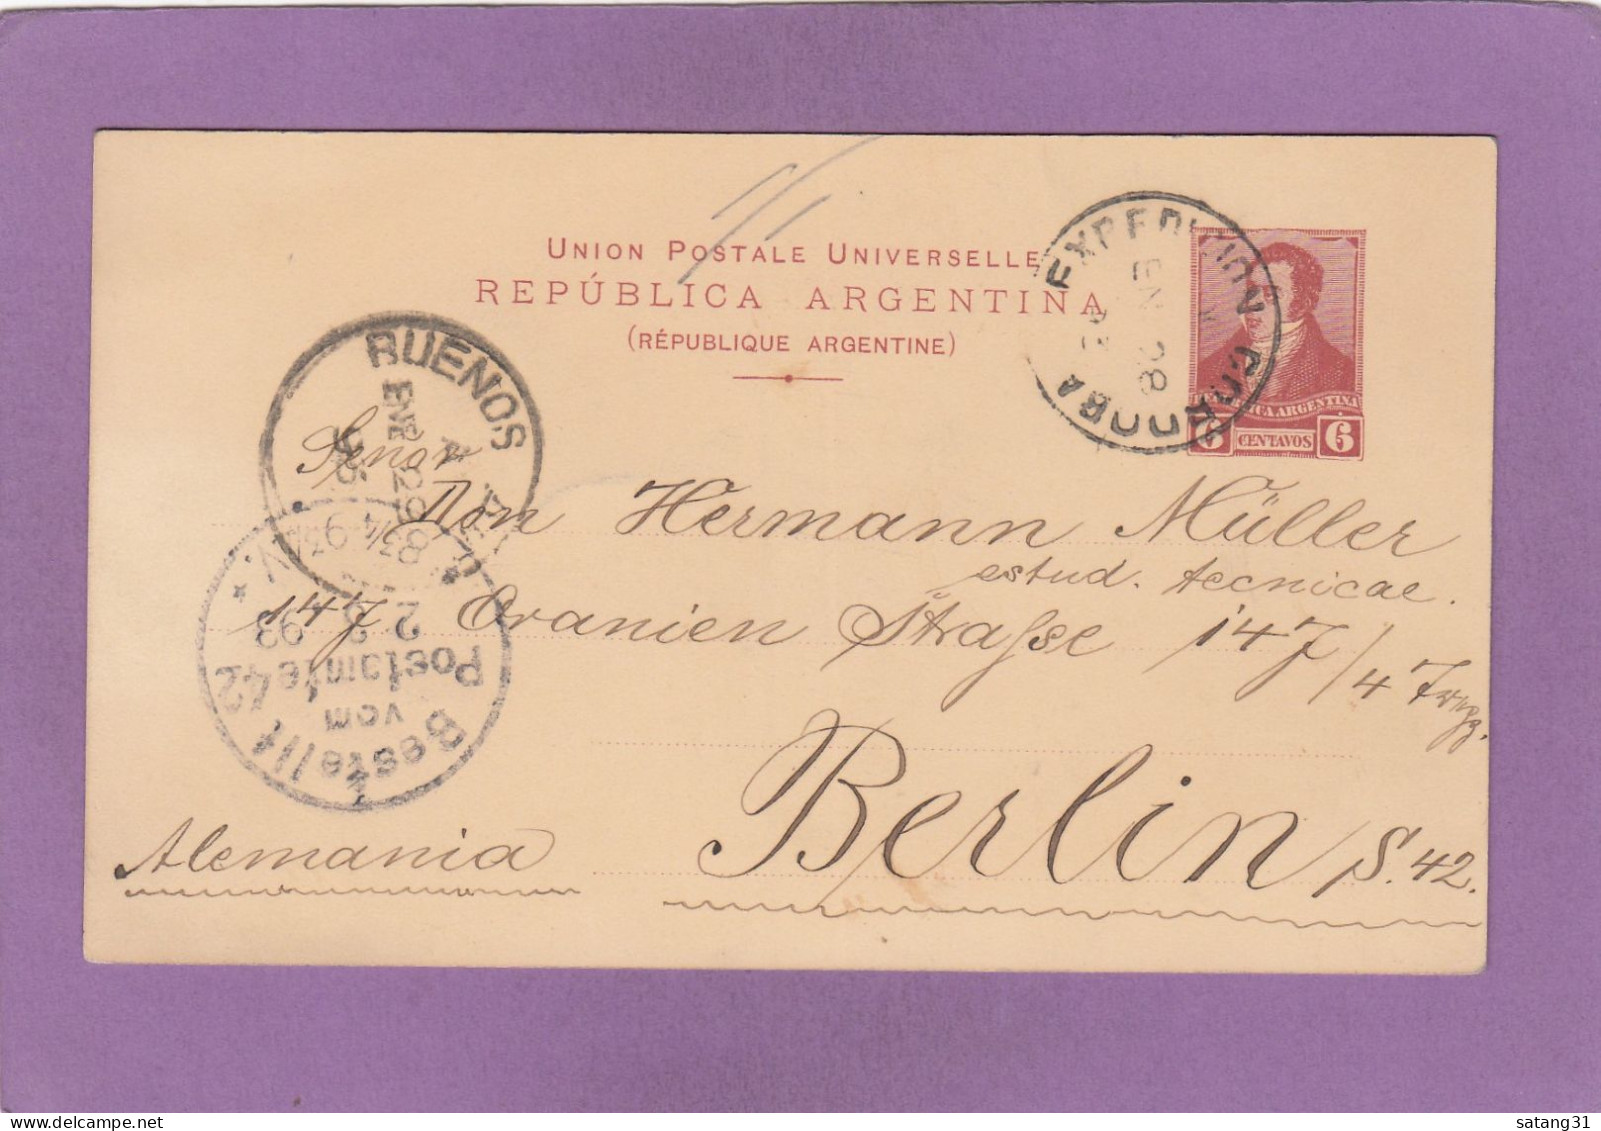 ENTIER POSTAL DE CORDOBA POUR BERLIN,VIA BUENOS AIRES,1893. - Enteros Postales